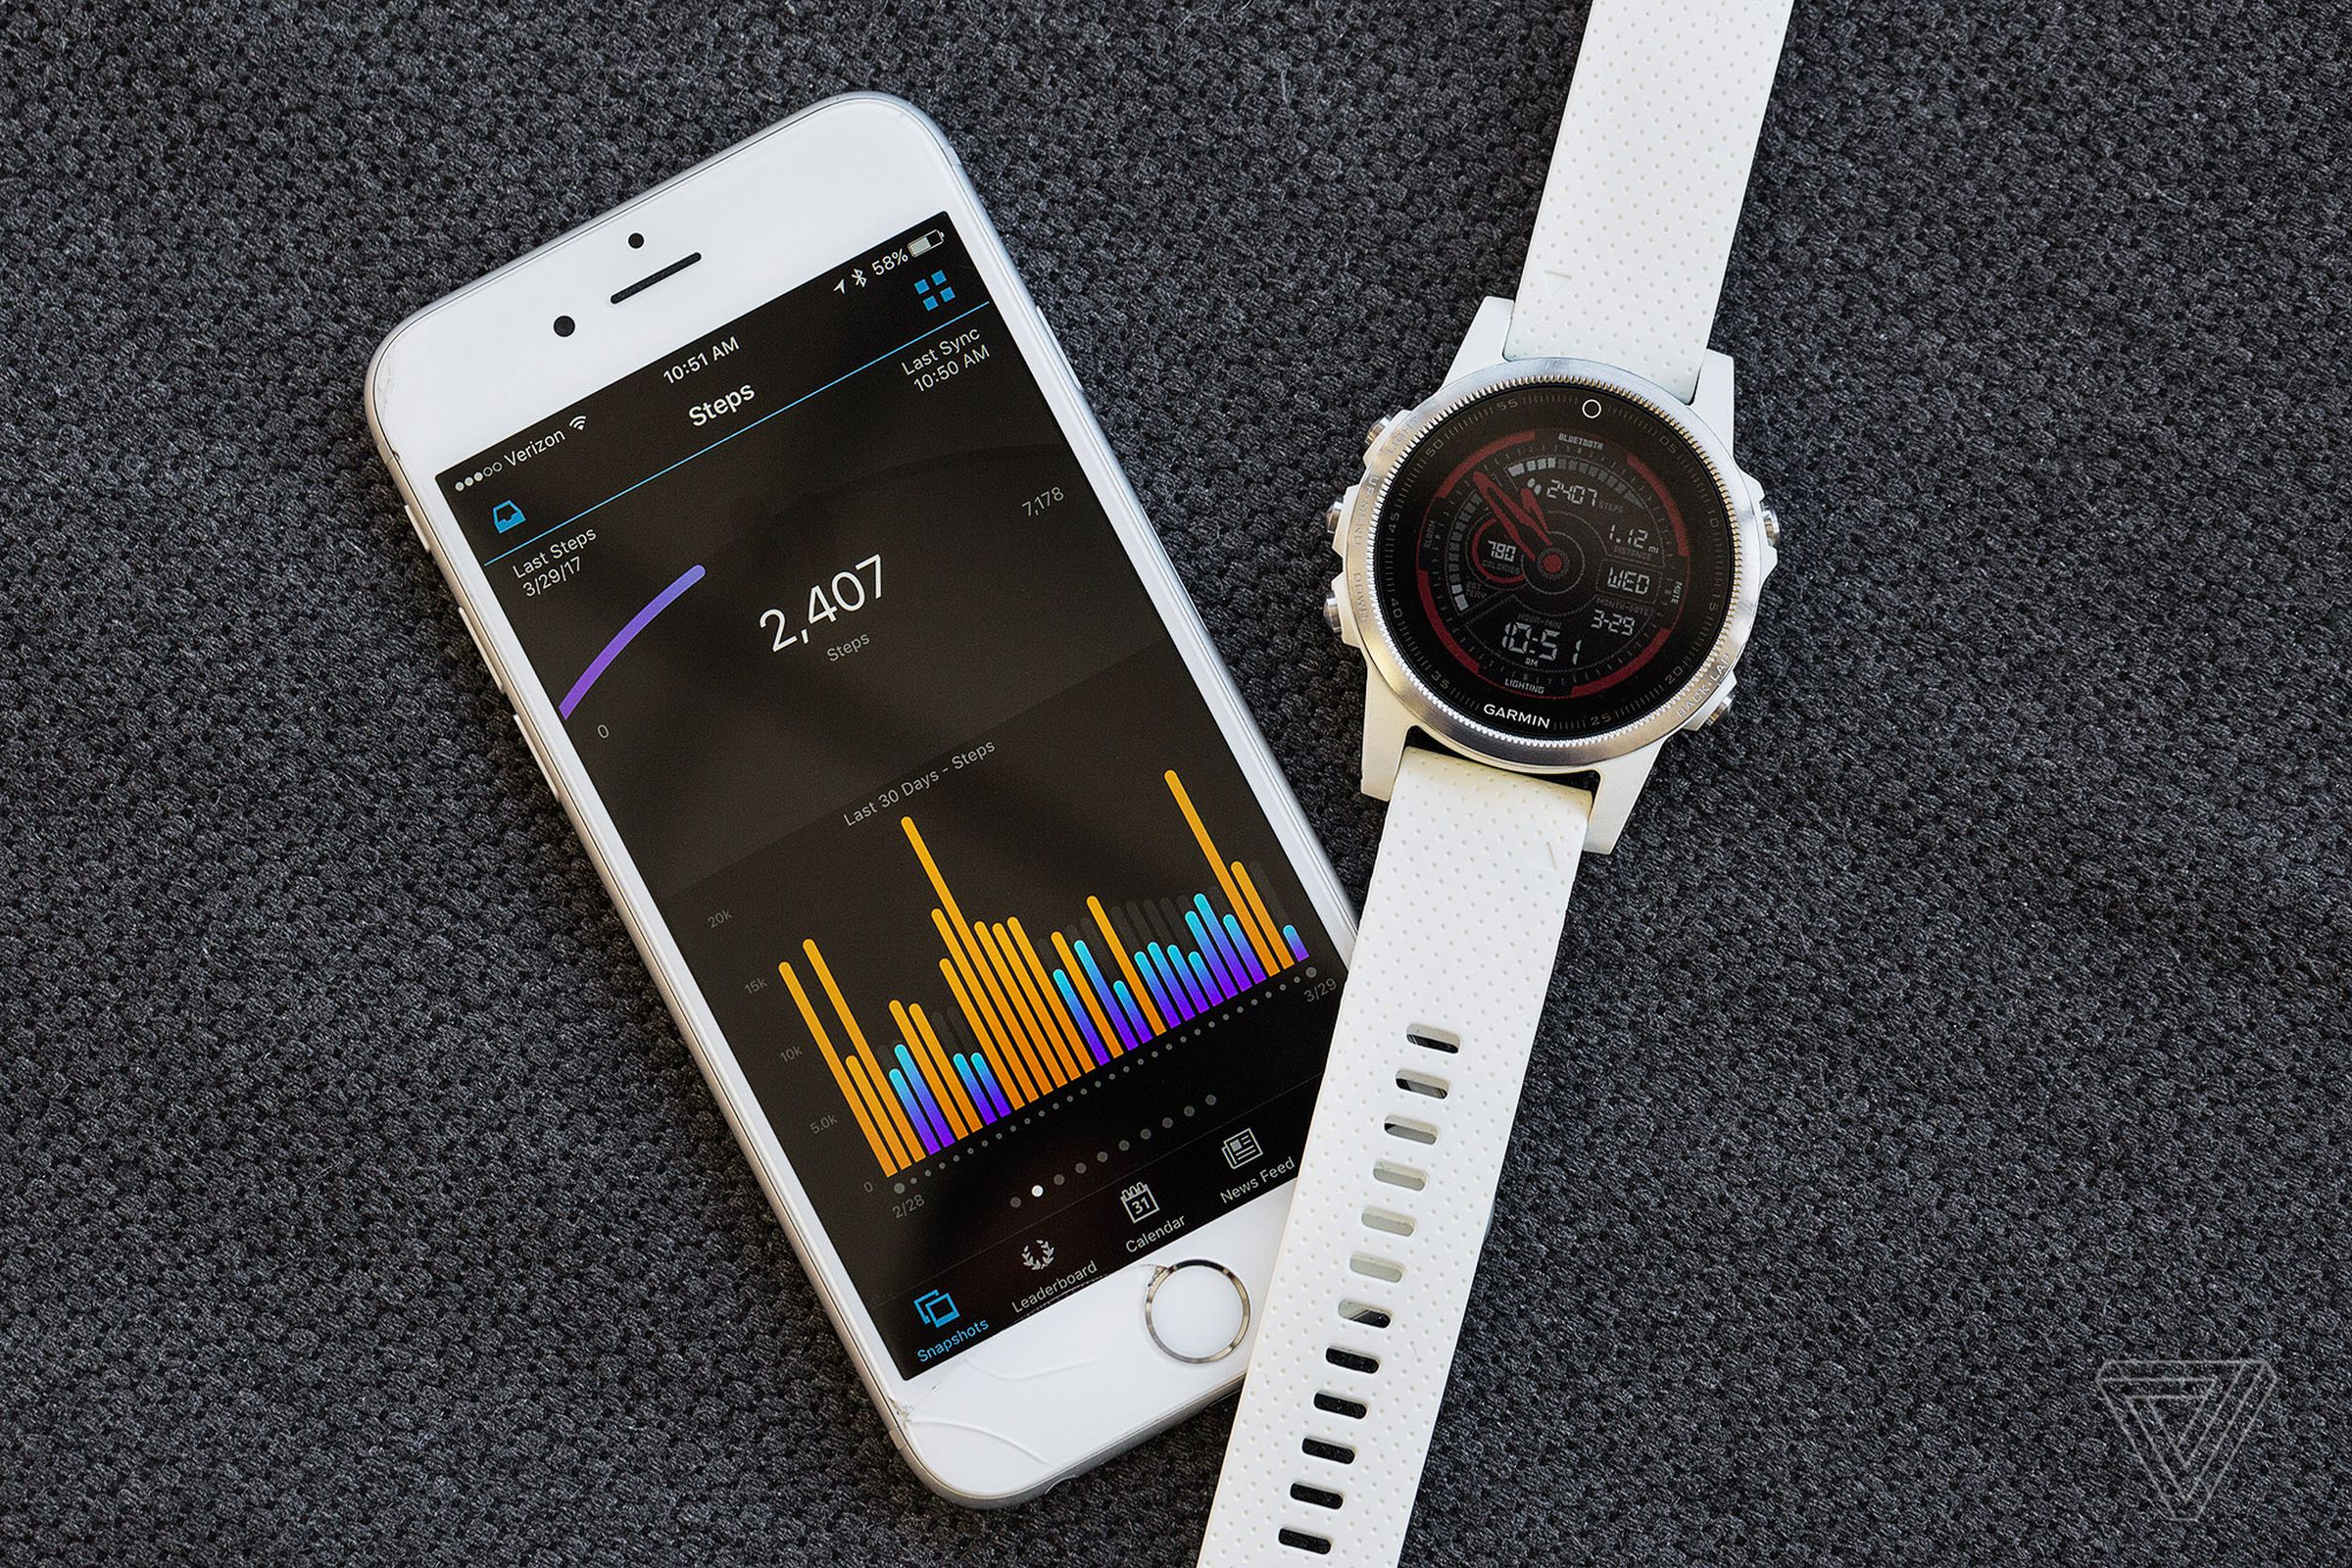 Garmin Fenix smartwatch and Garmin Connect app.